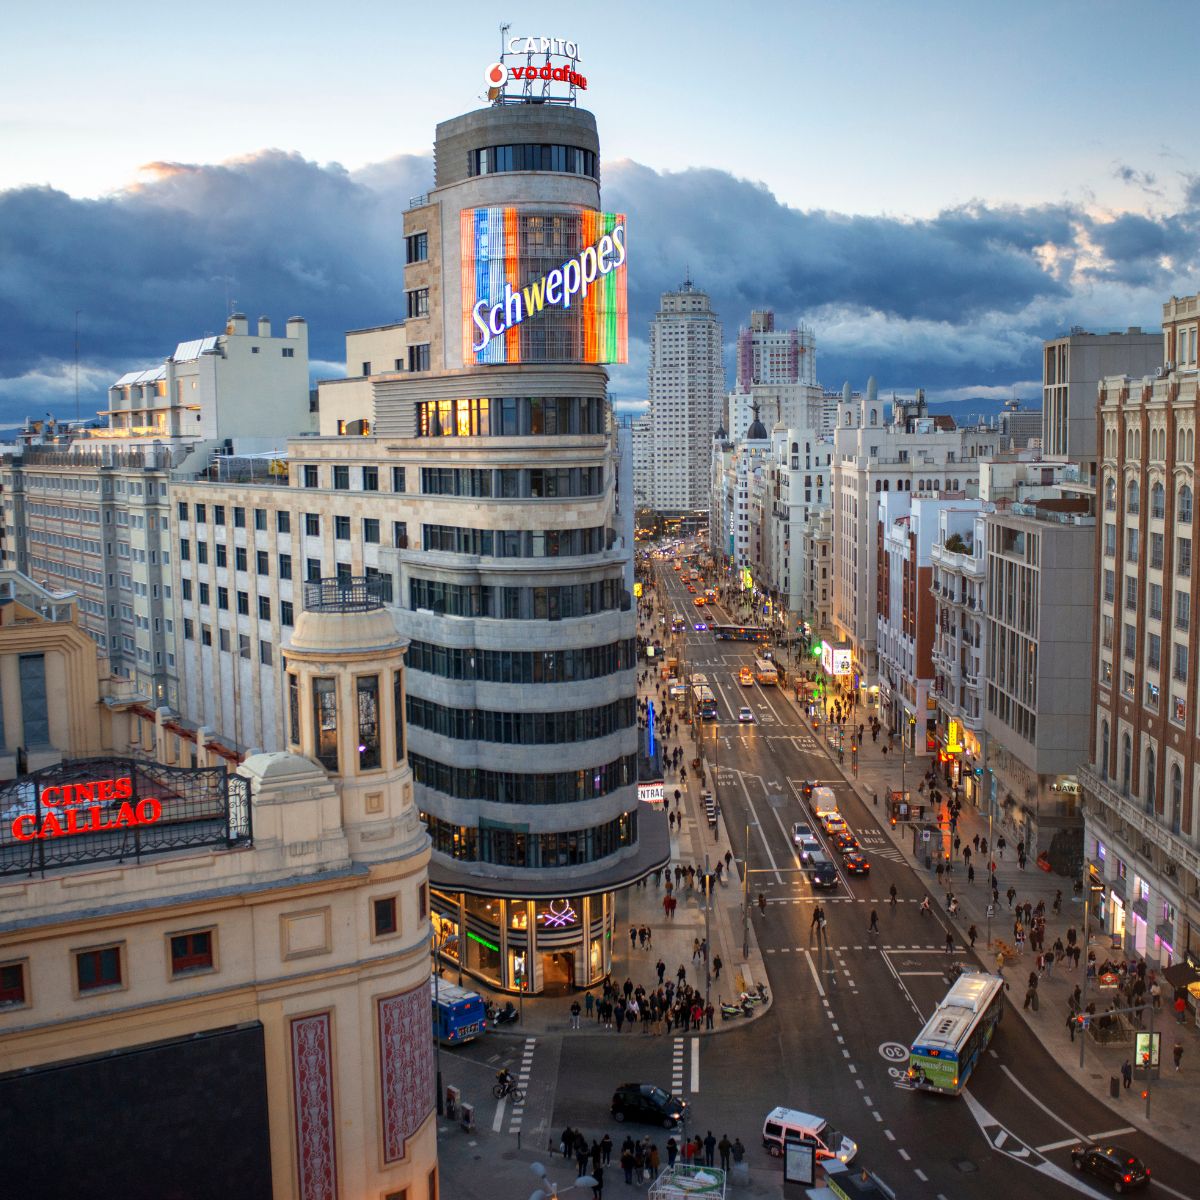 Tours Privados por Madrid con guía turístico